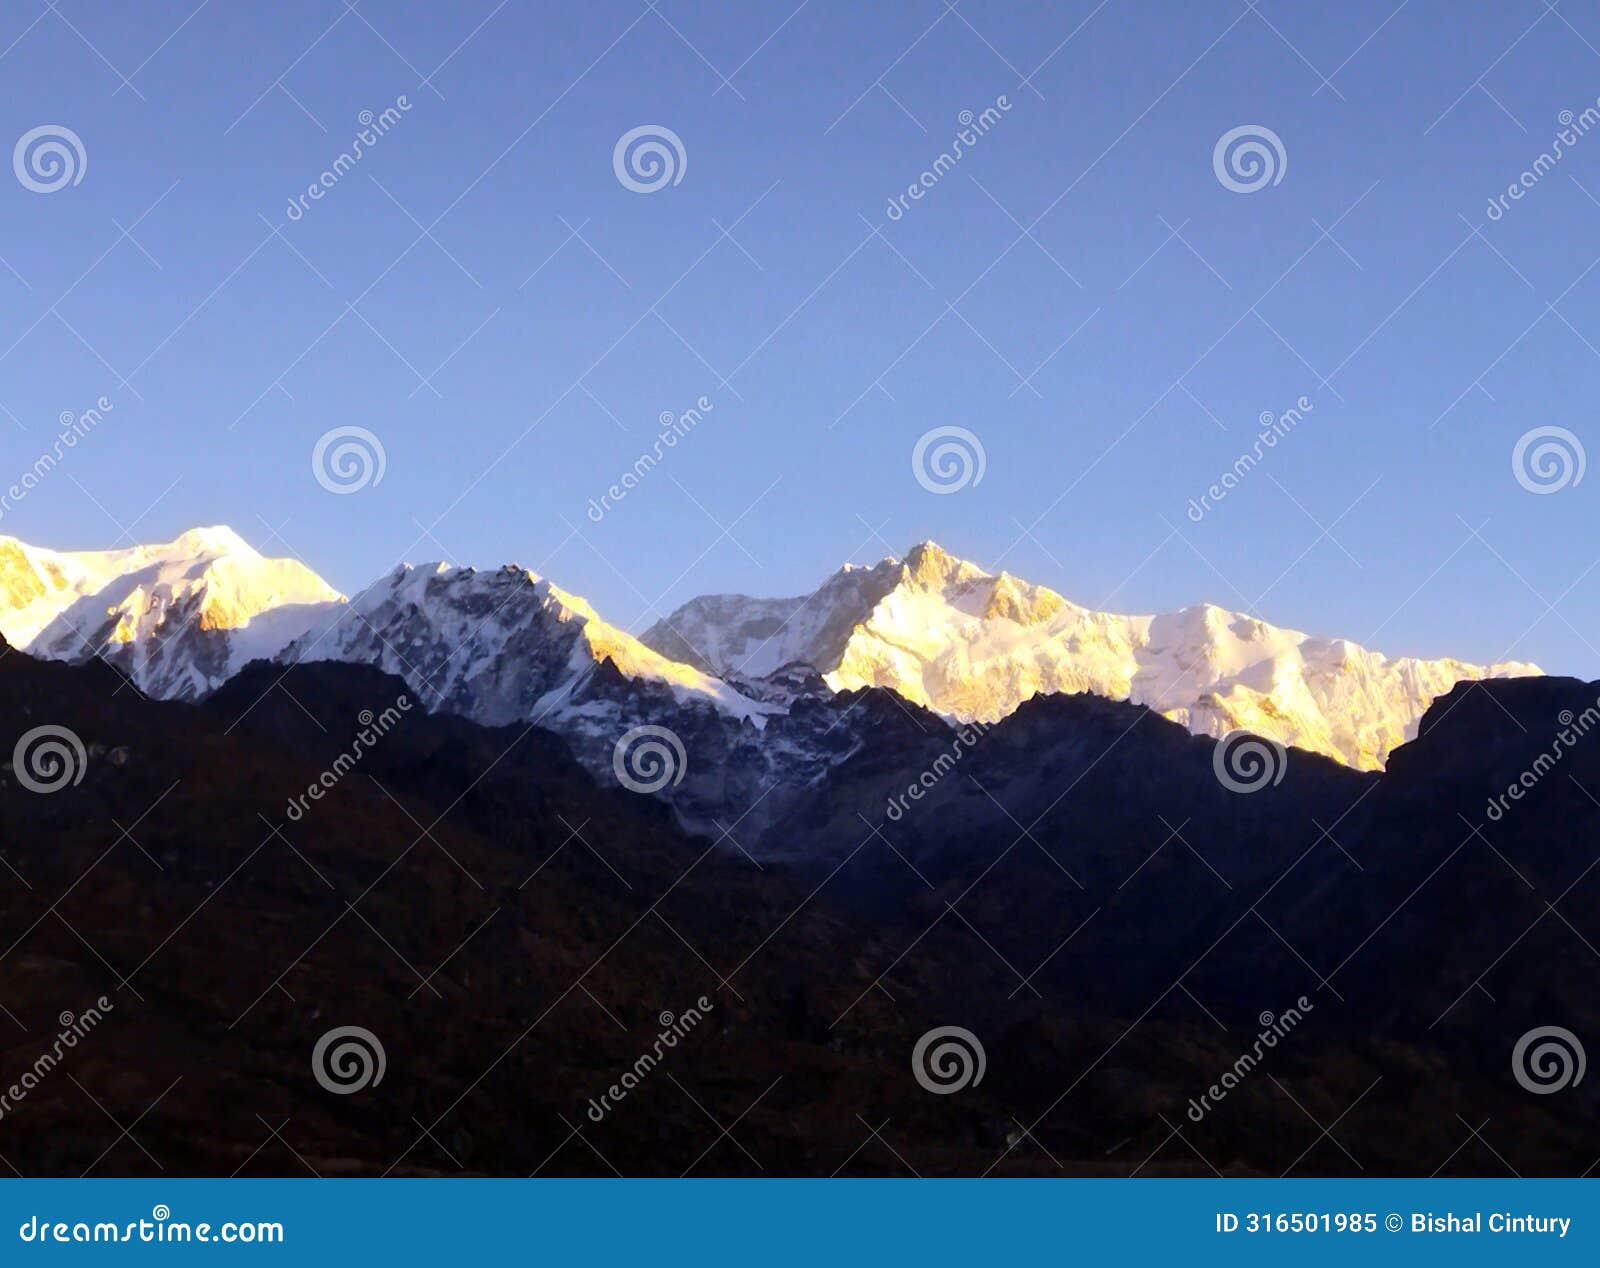 mt. kanchenjunga during sunrise in dzongri